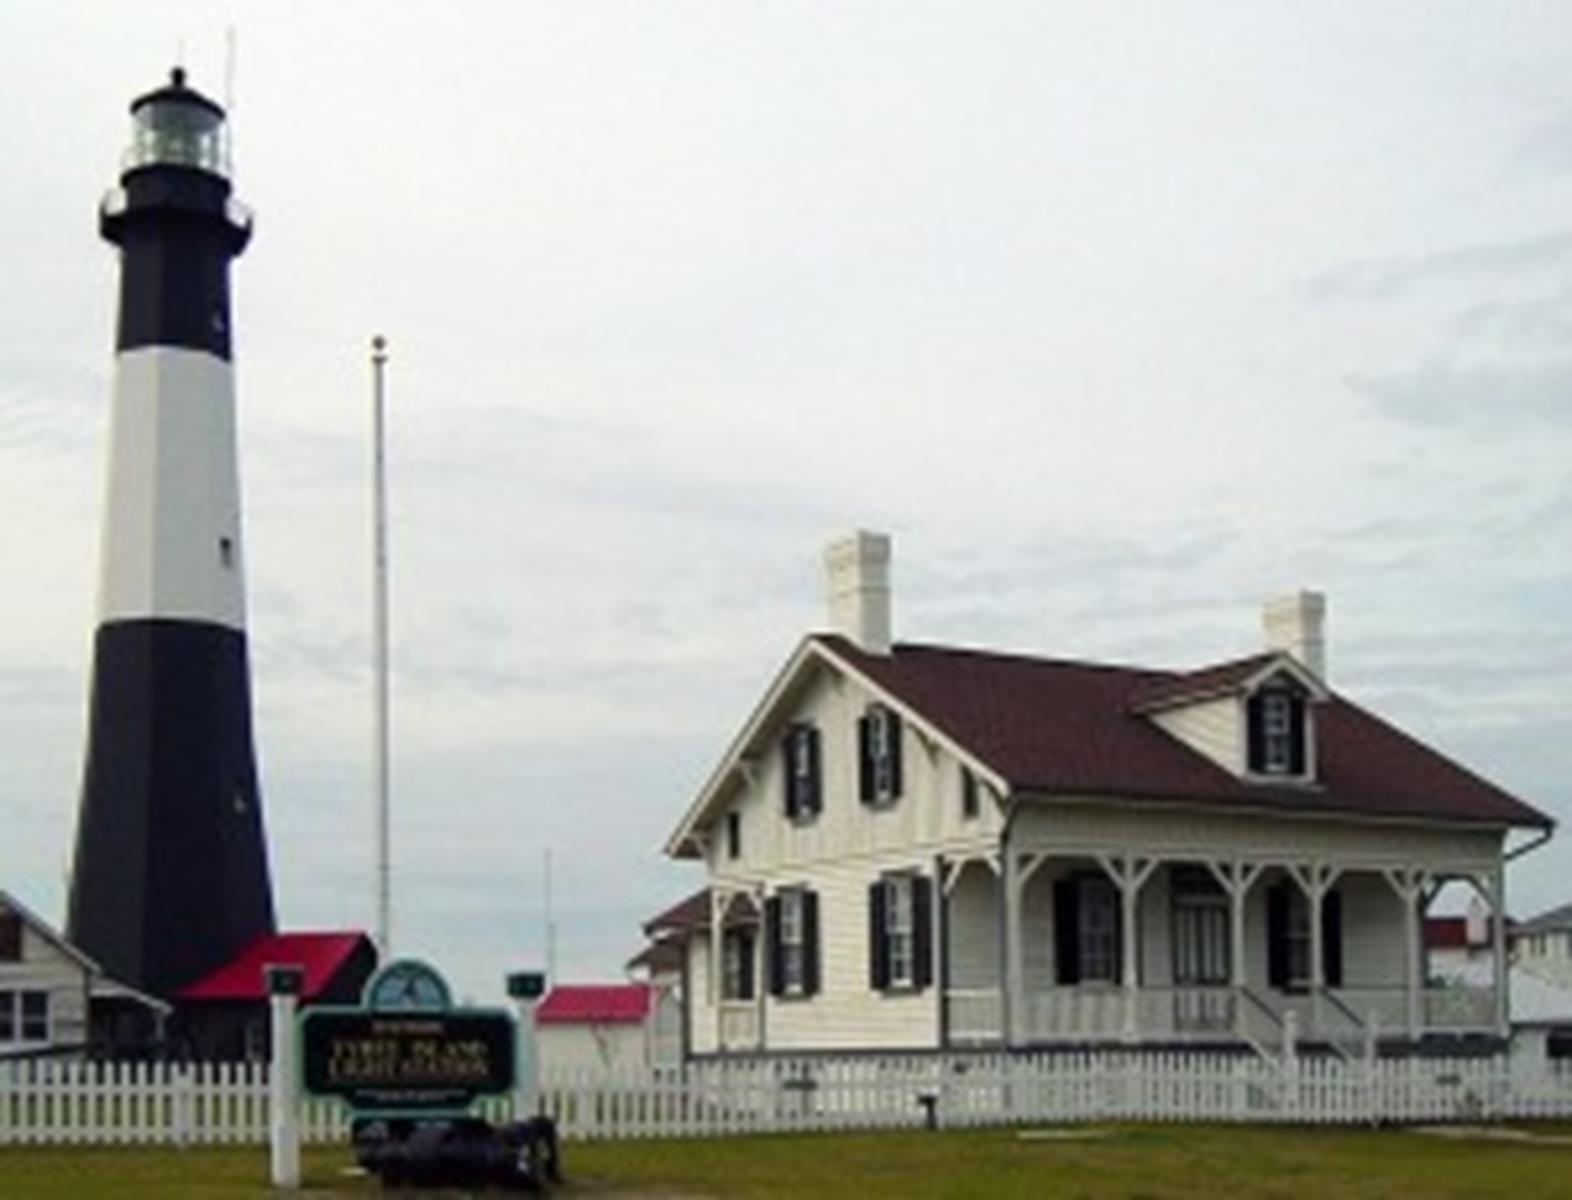 The Tybee Island Light Station